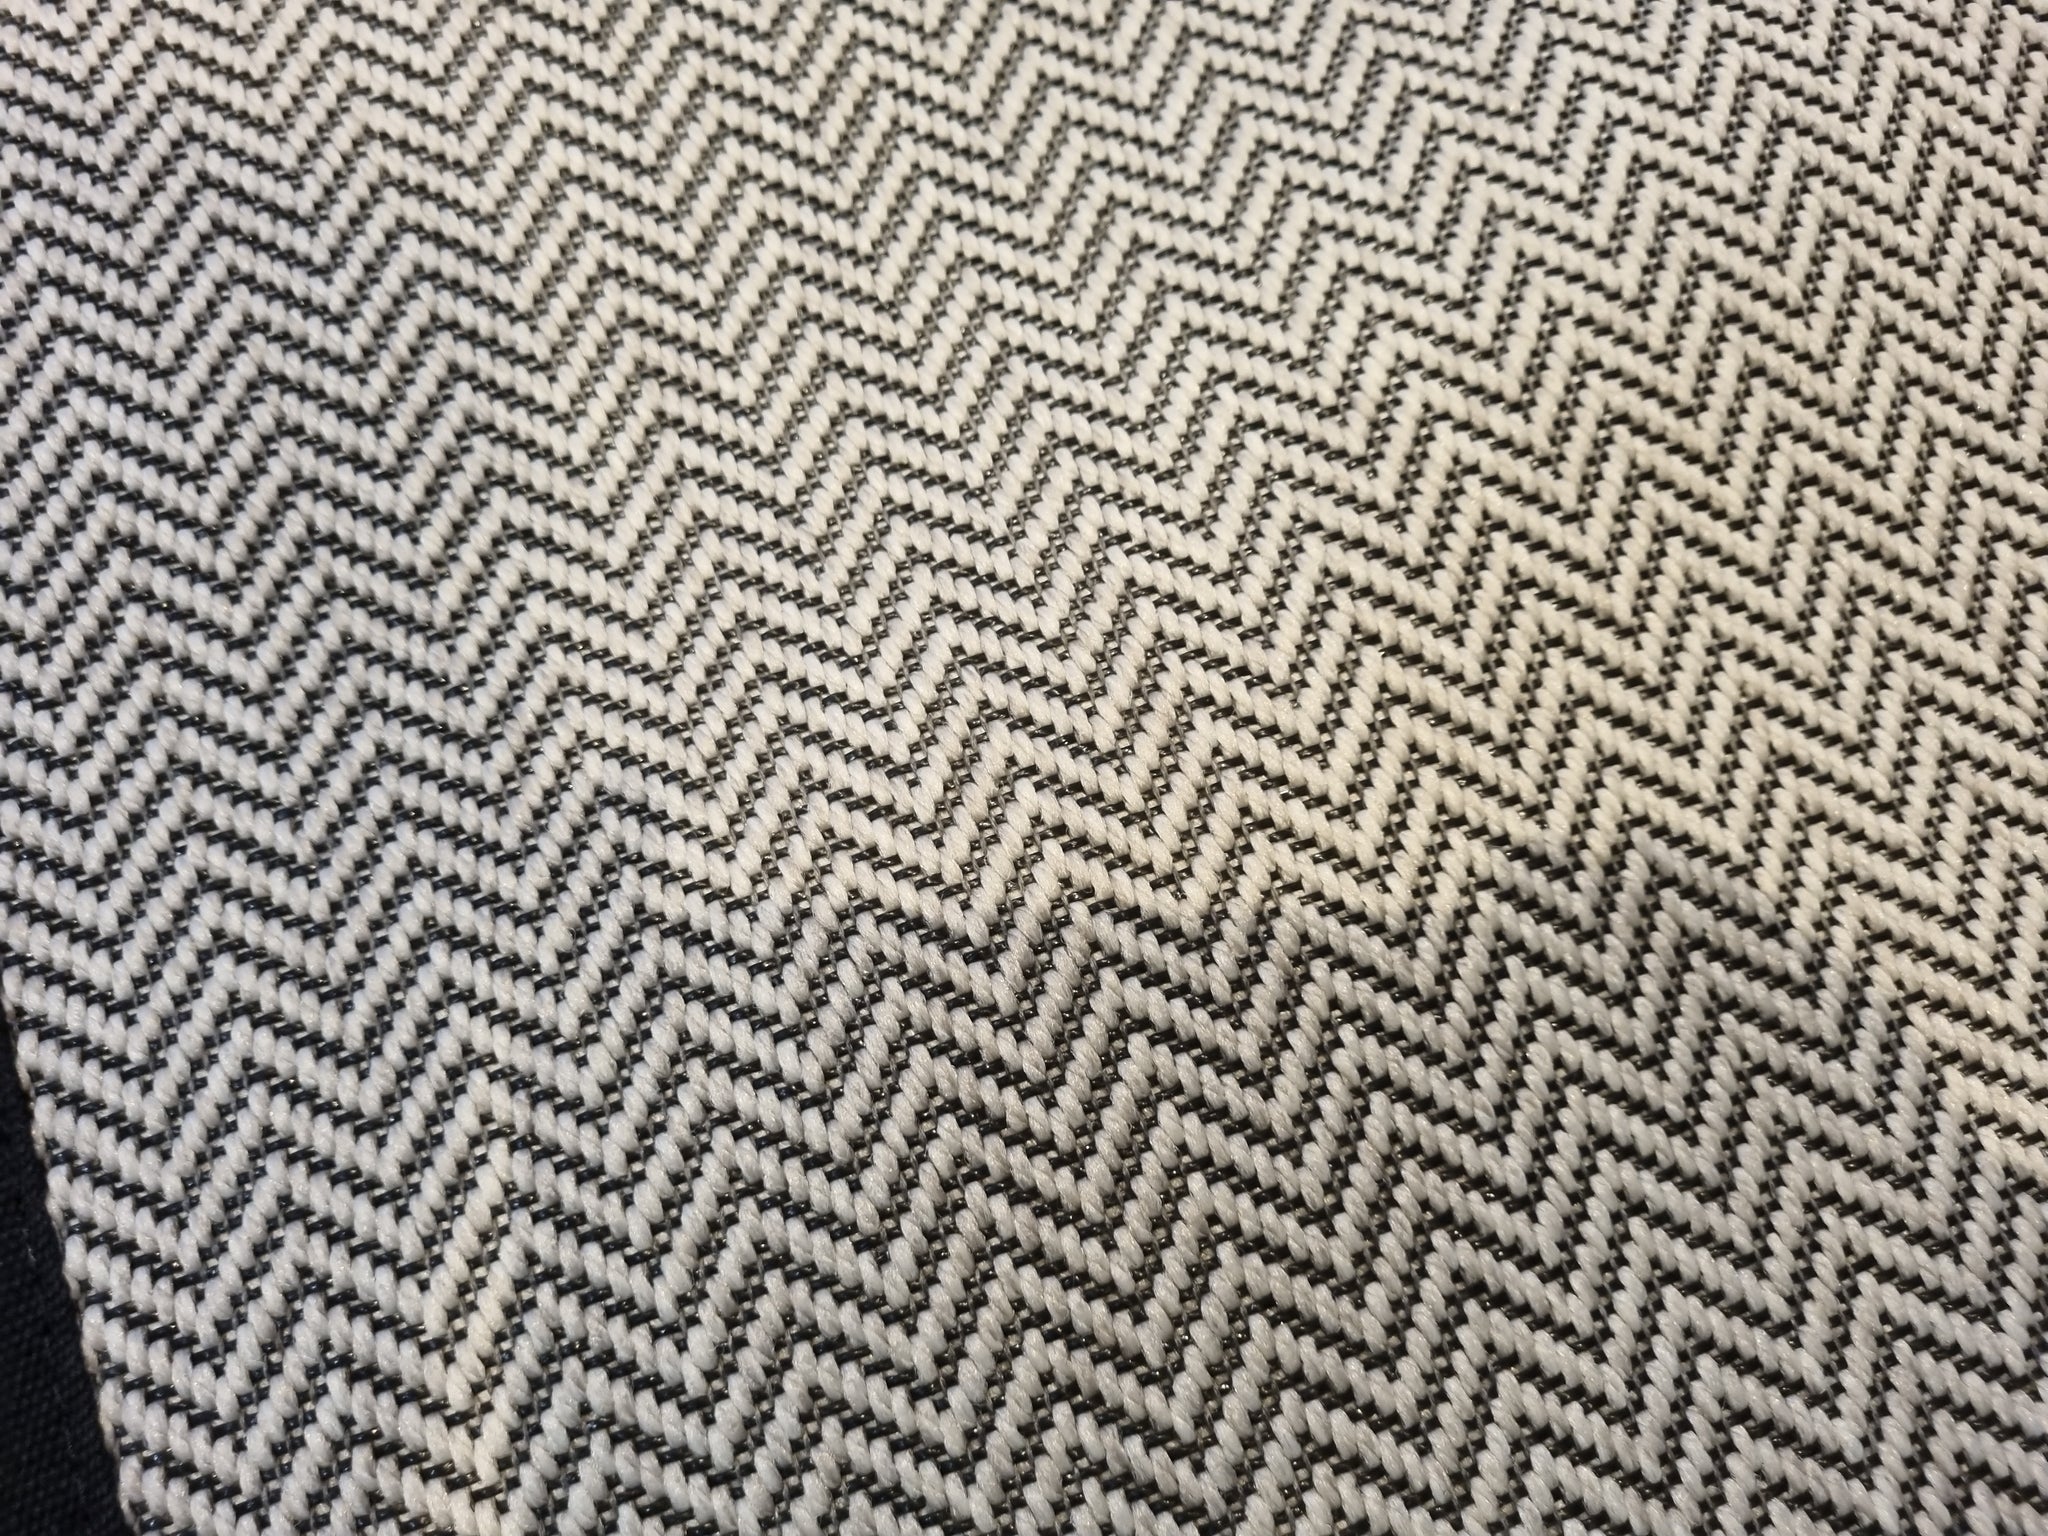 Herringbone Faux Sisal Carpet Stair Runner with cotton border